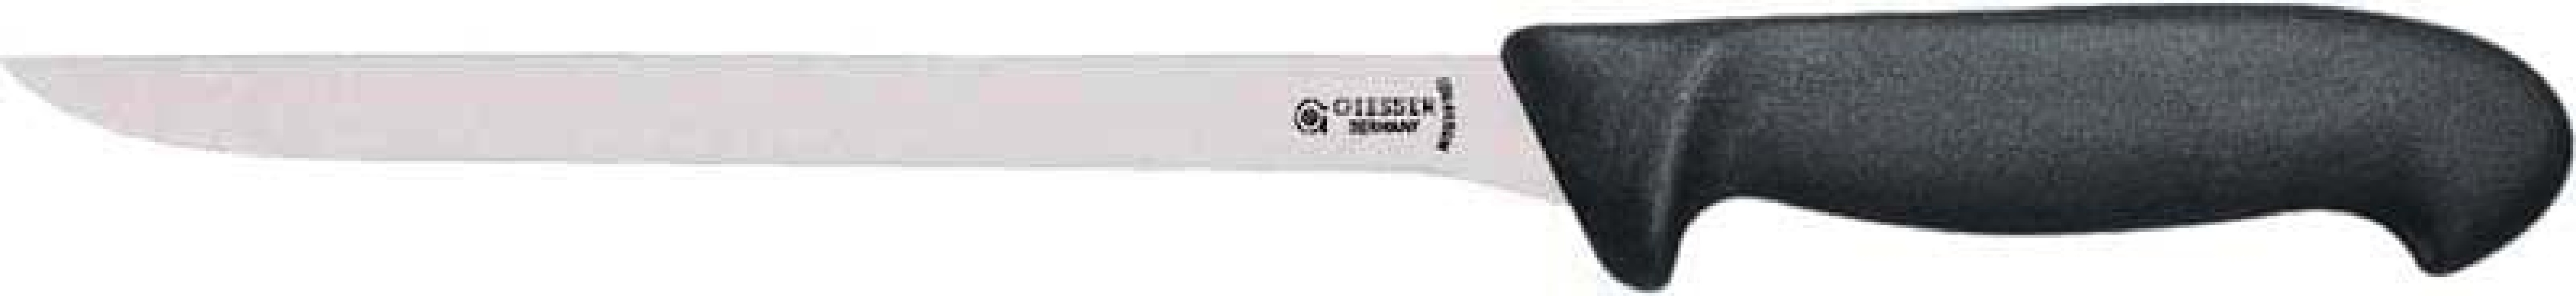 Filet knife Giesser 2285, 21 cm, black